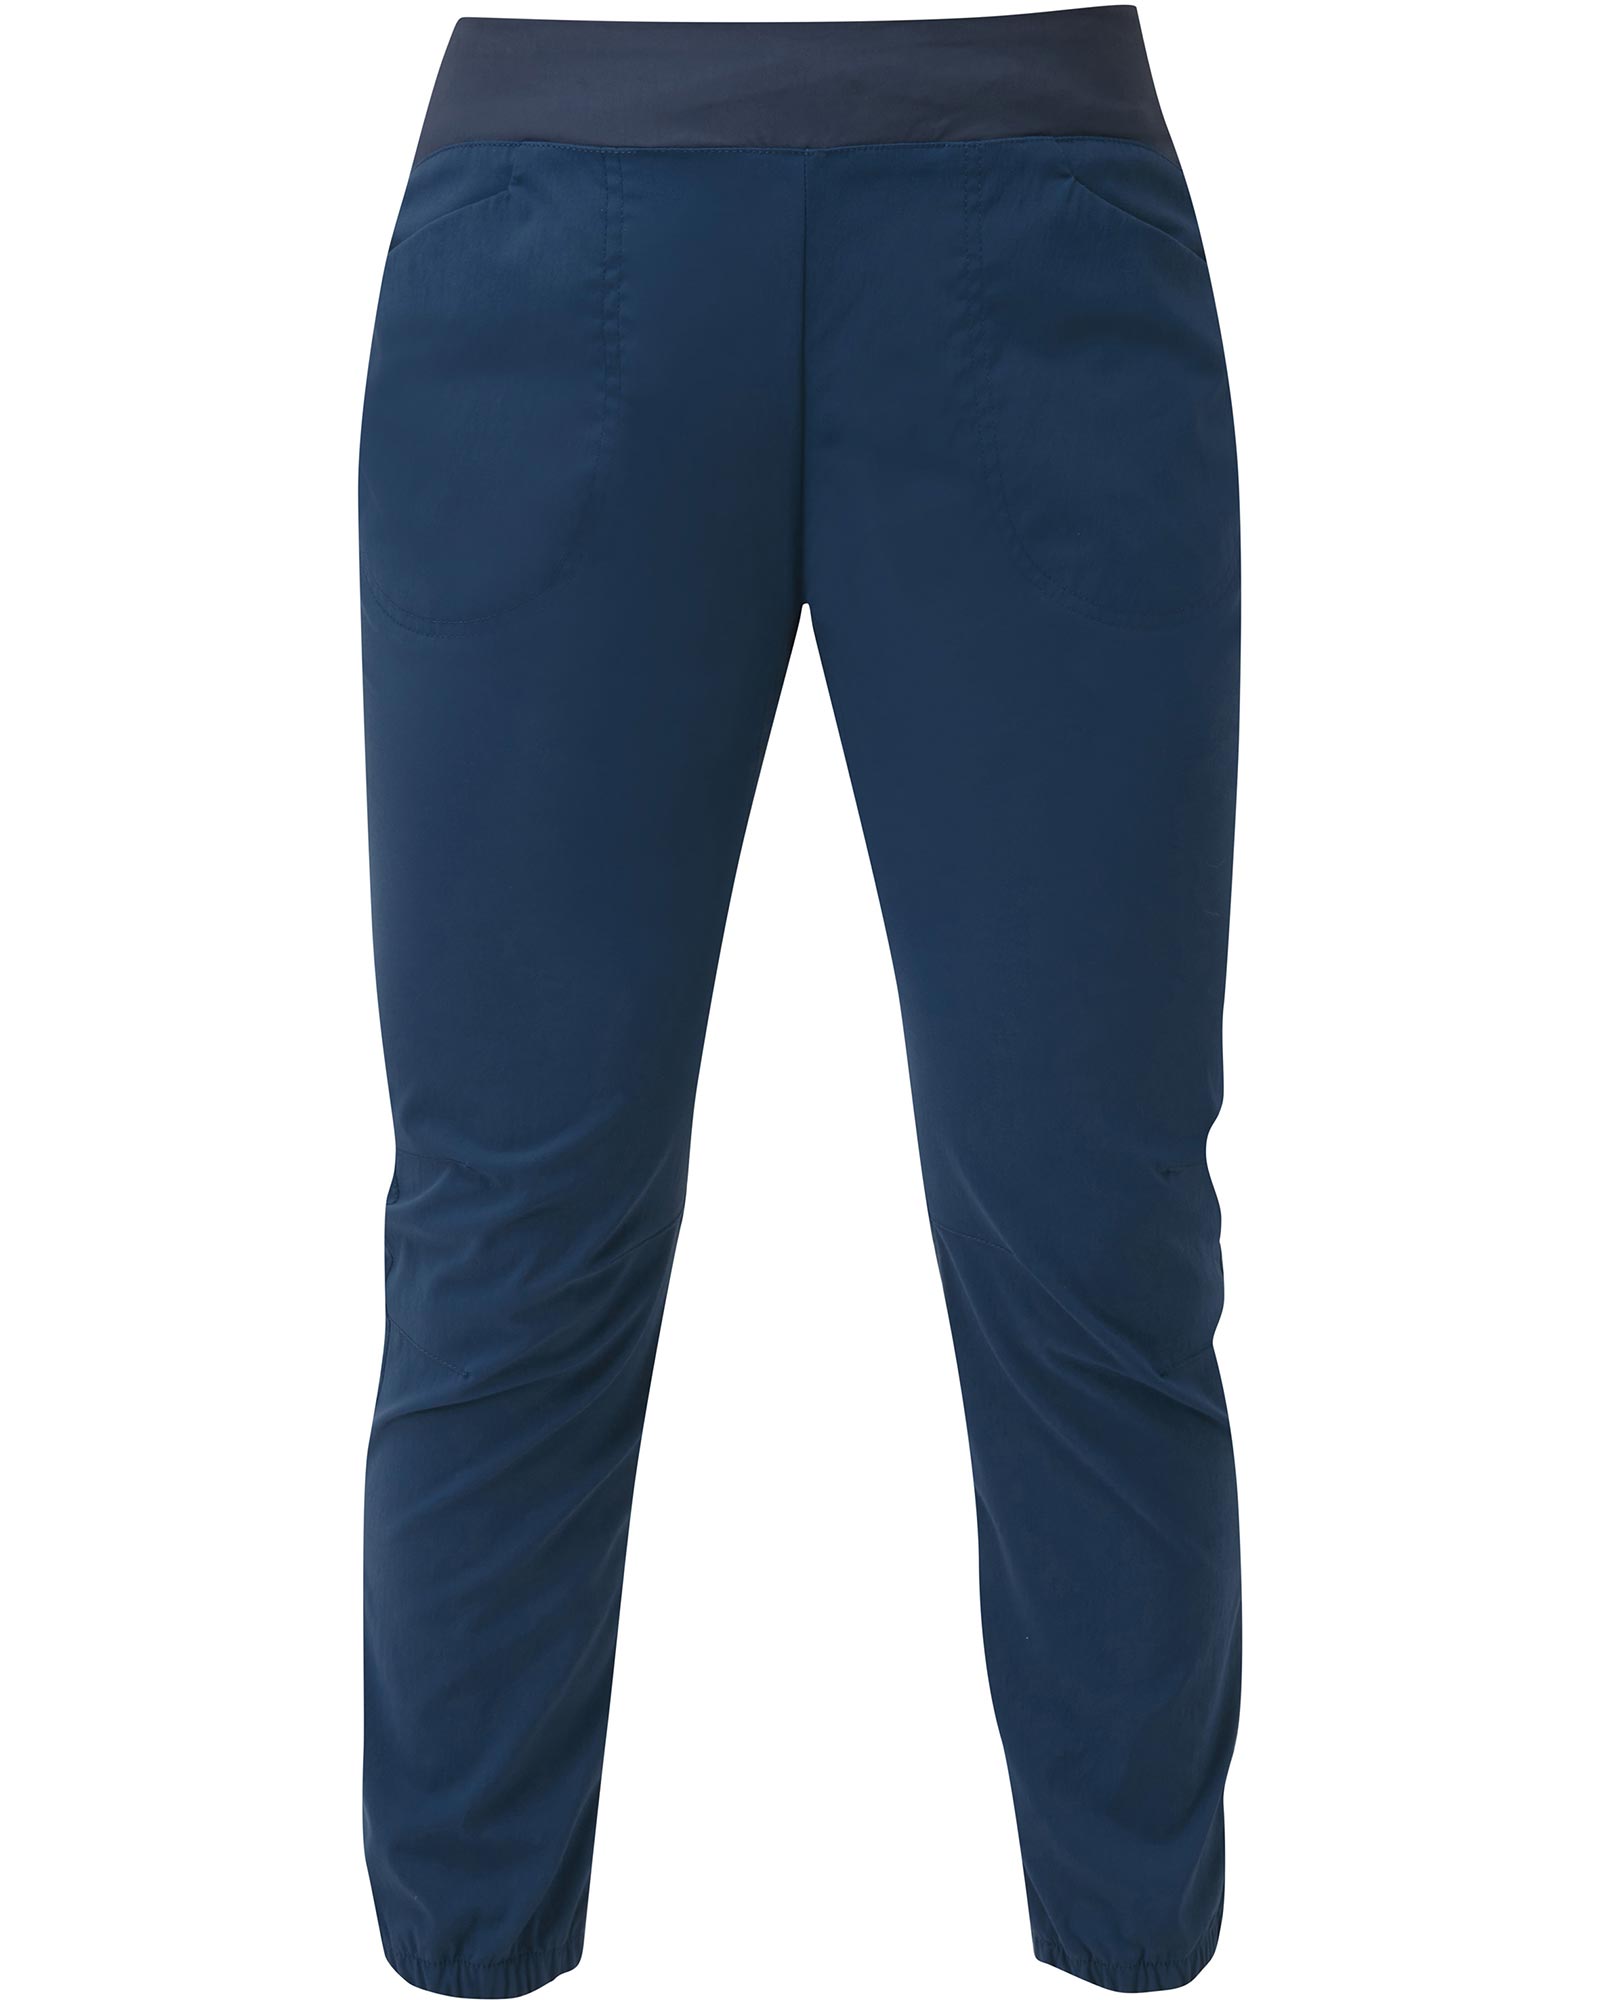 Mountain Equipment Dihedral Crop Women’s Pants - Majolica Blue 16